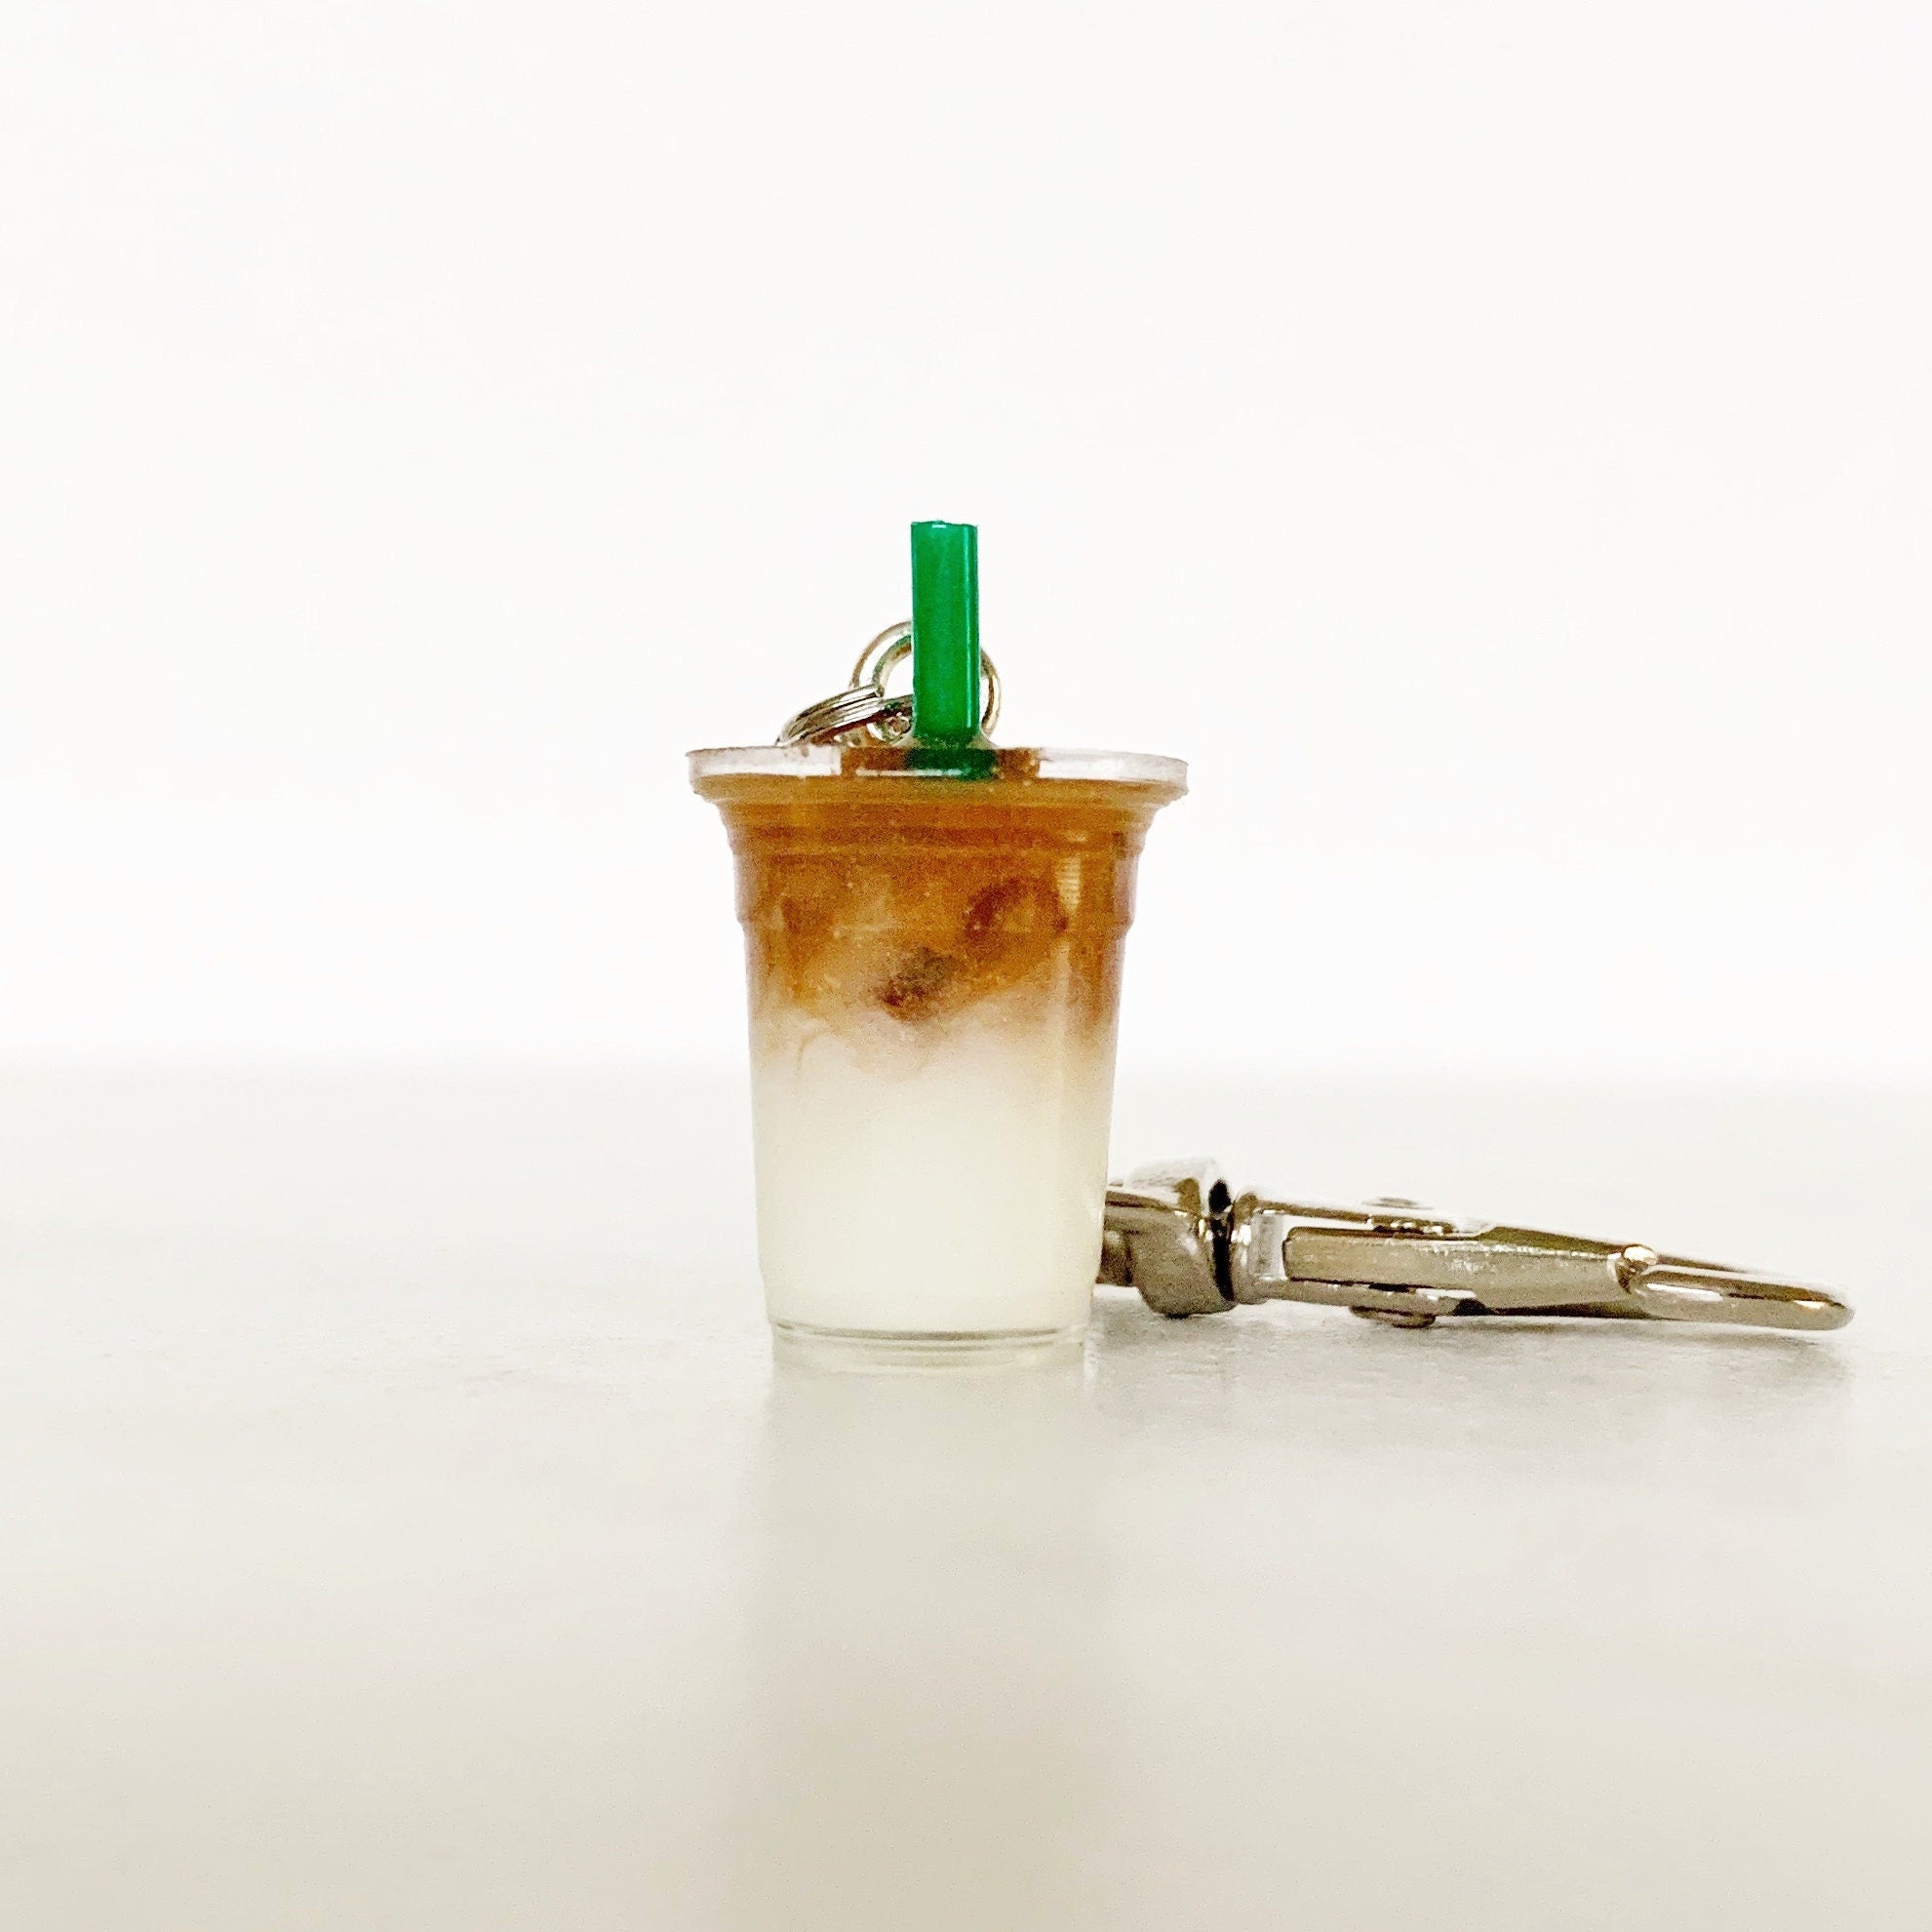 CarleyDesignsCo BRB Getting Iced Coffee Acrylic Keychain - Aesthetic, Car Keys, Gift Idea, Pink, Iced Coffee Queen, Present